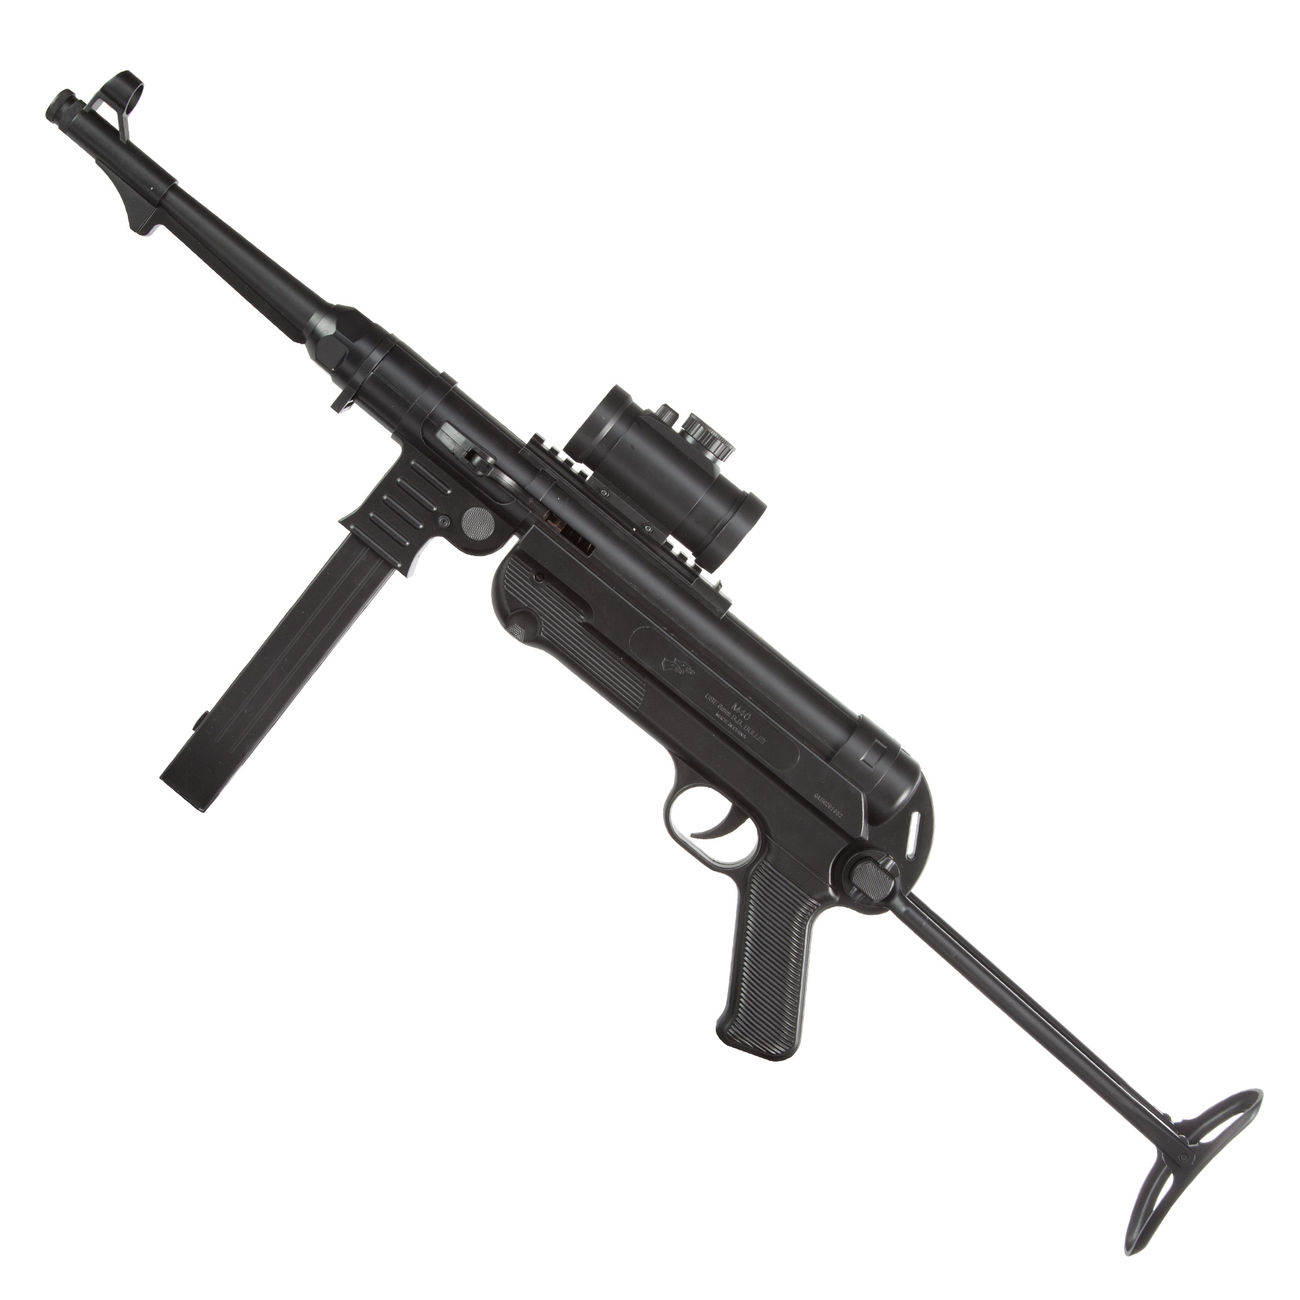 D.E. MP40 Maschinenpistole Springer 6mm BB schwarz Bild 1